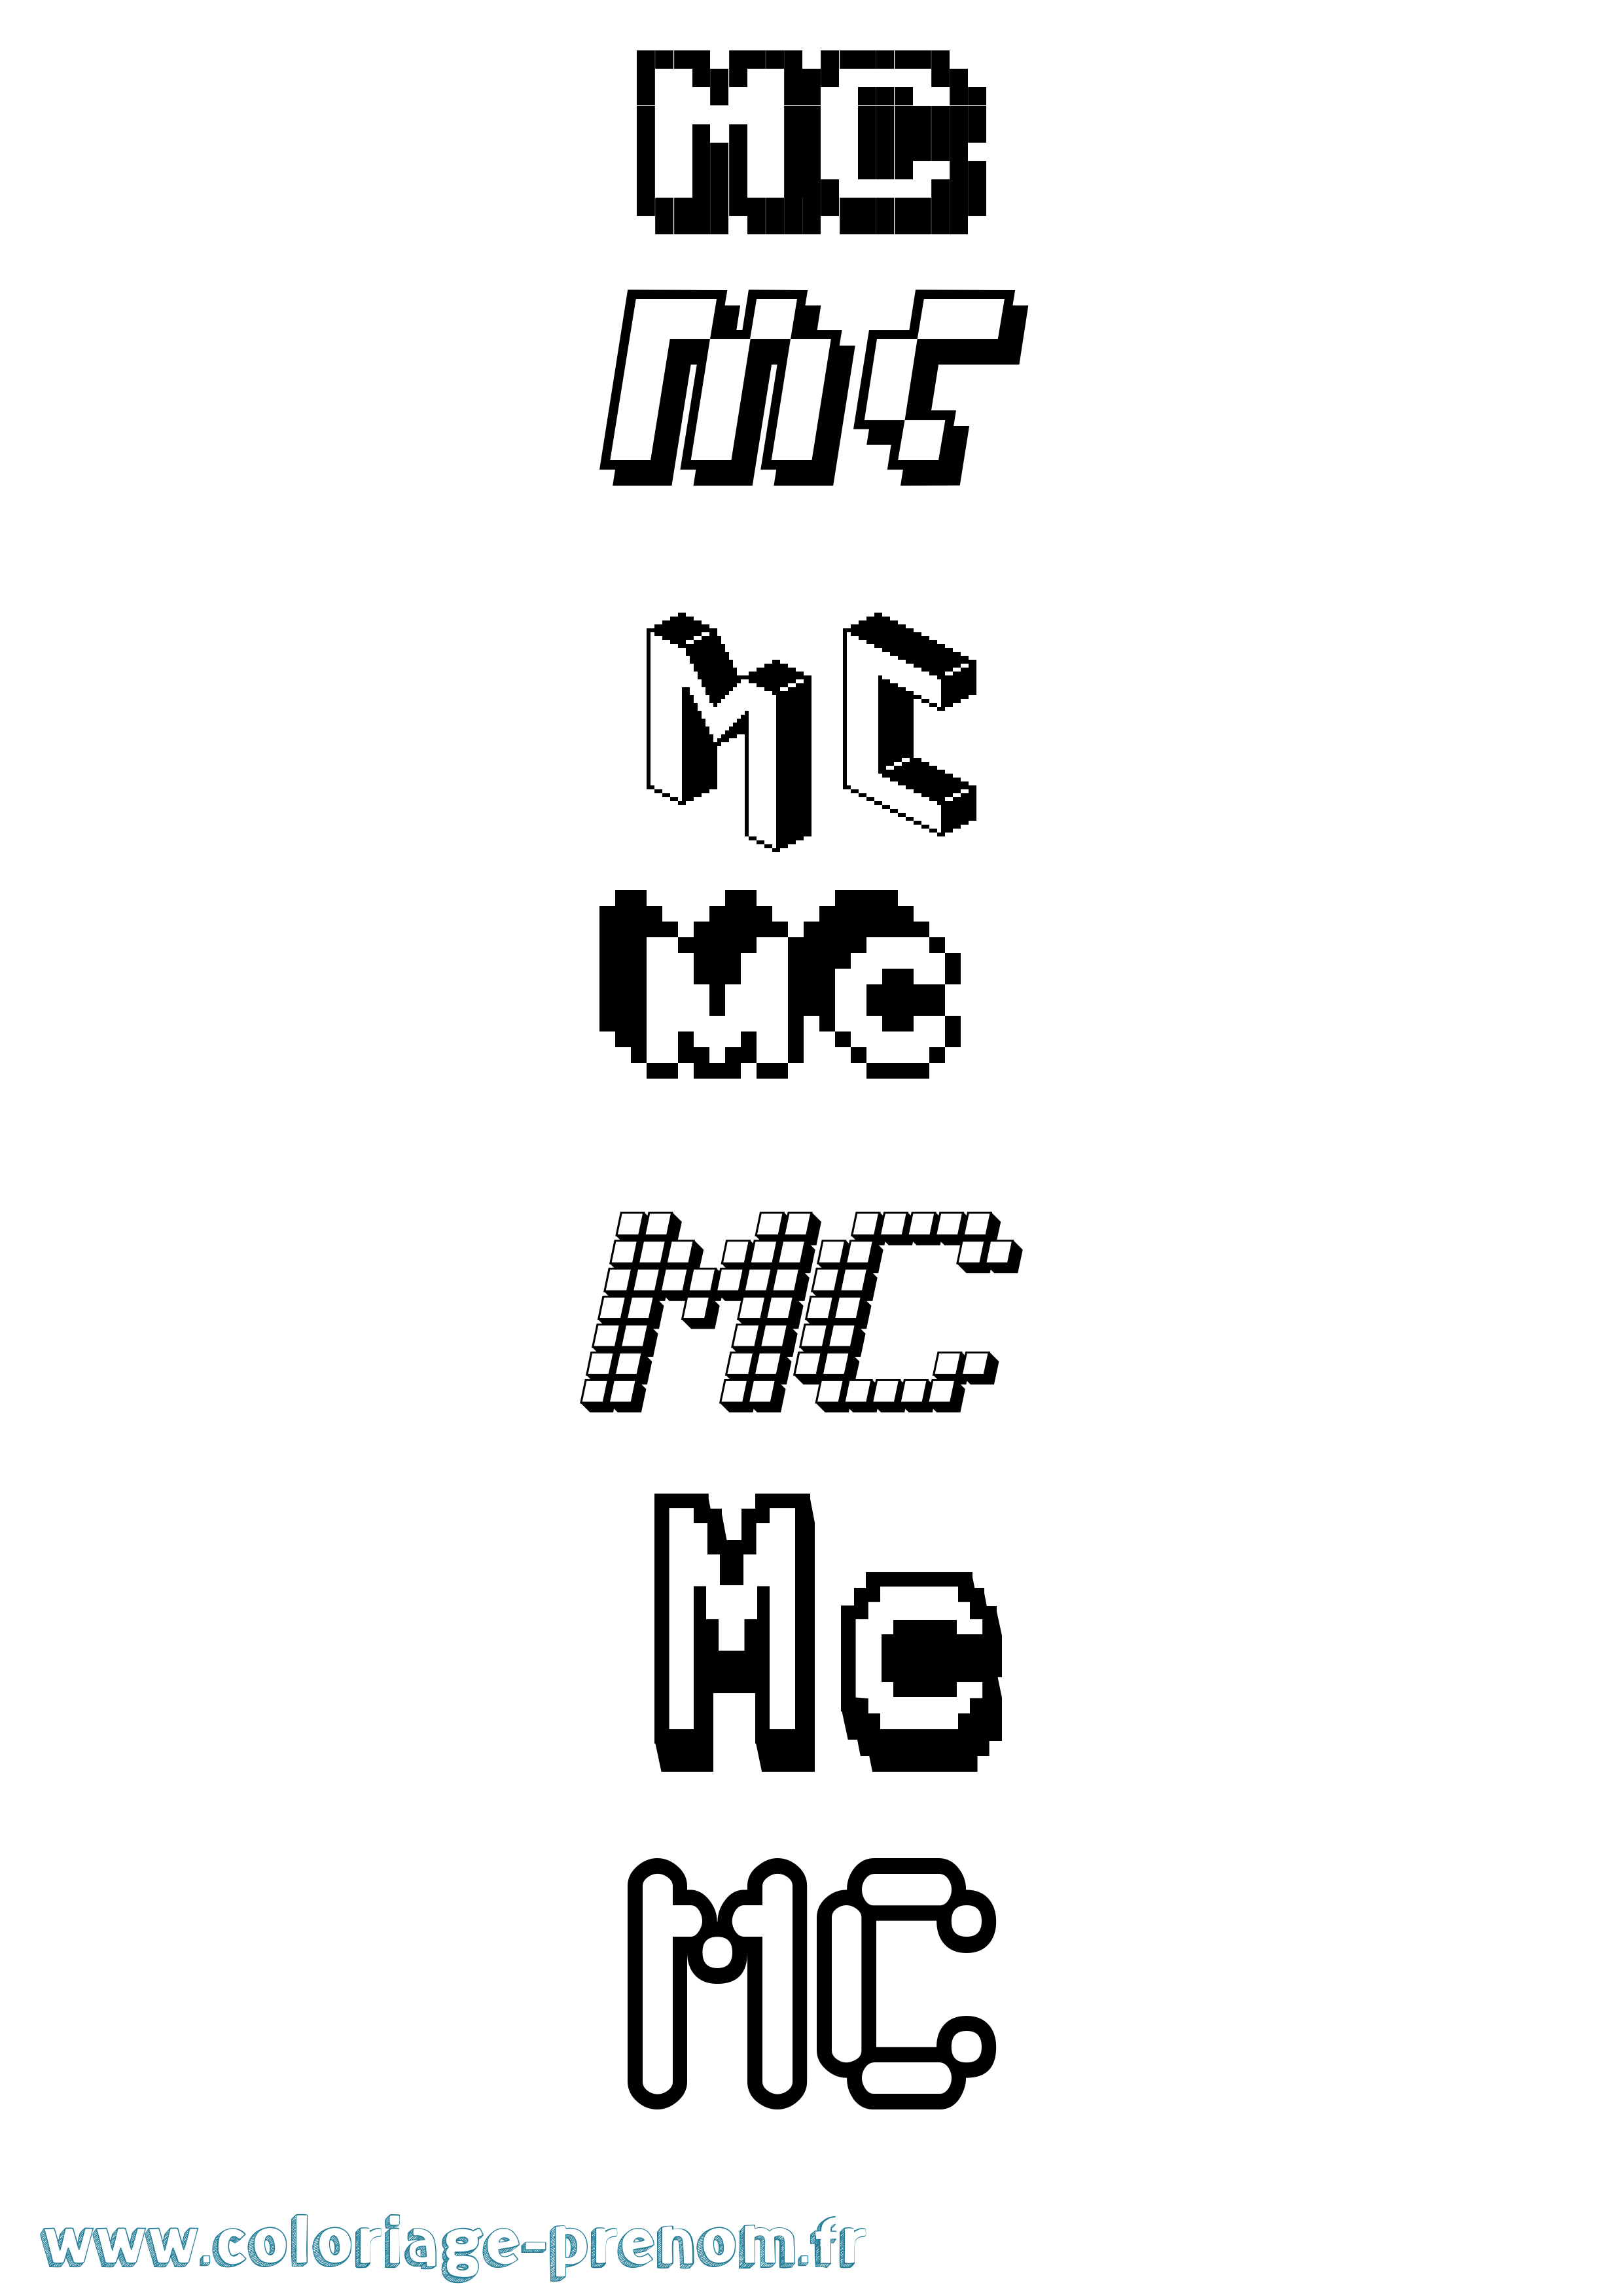 Coloriage prénom Mc Pixel